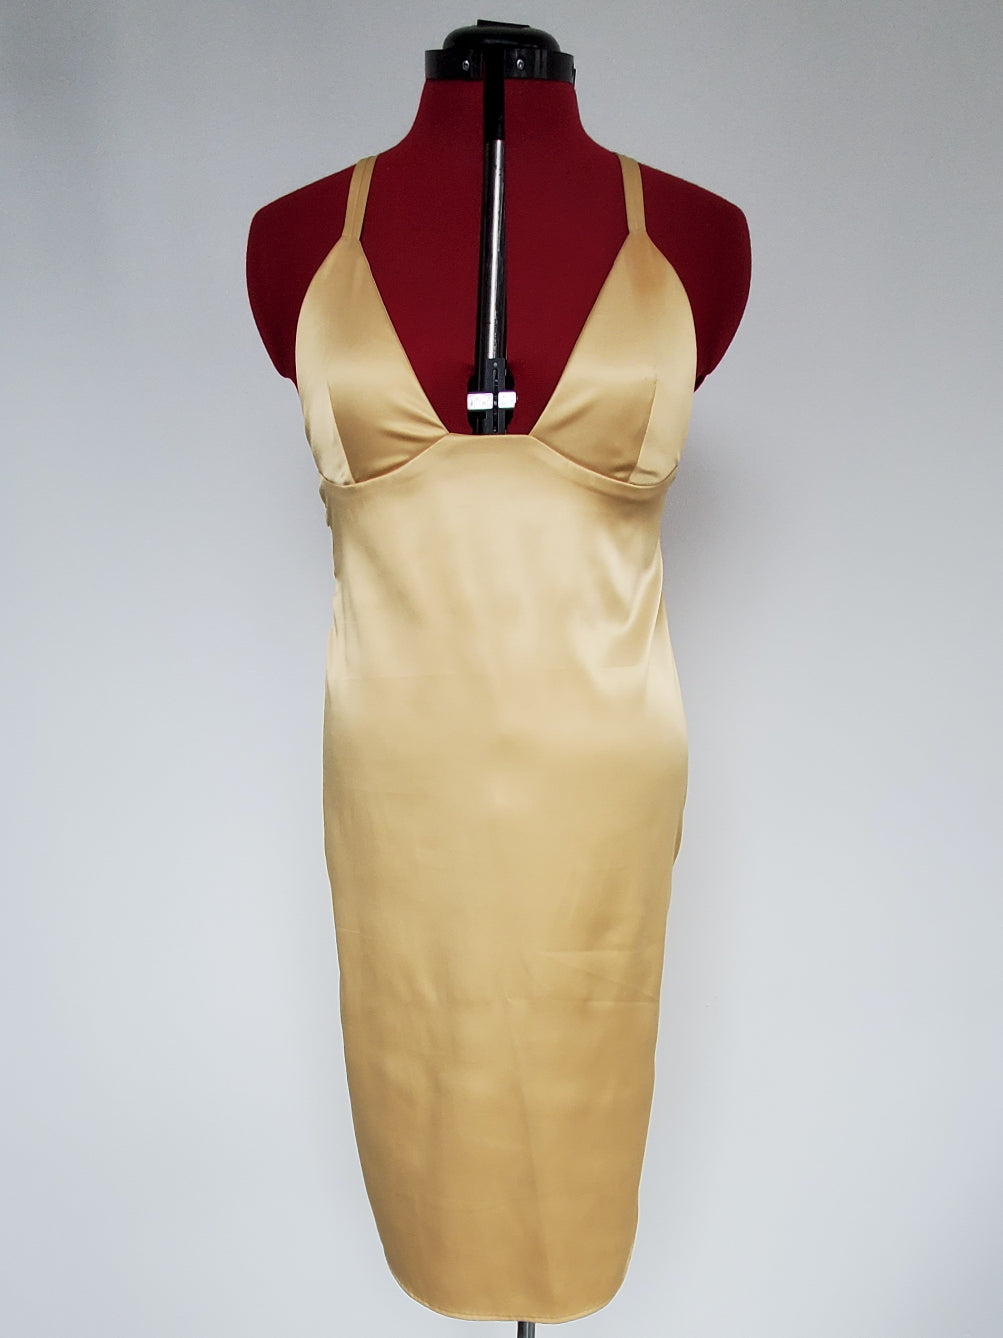 CM Gold Fringe Dress (S/M) - 1of1